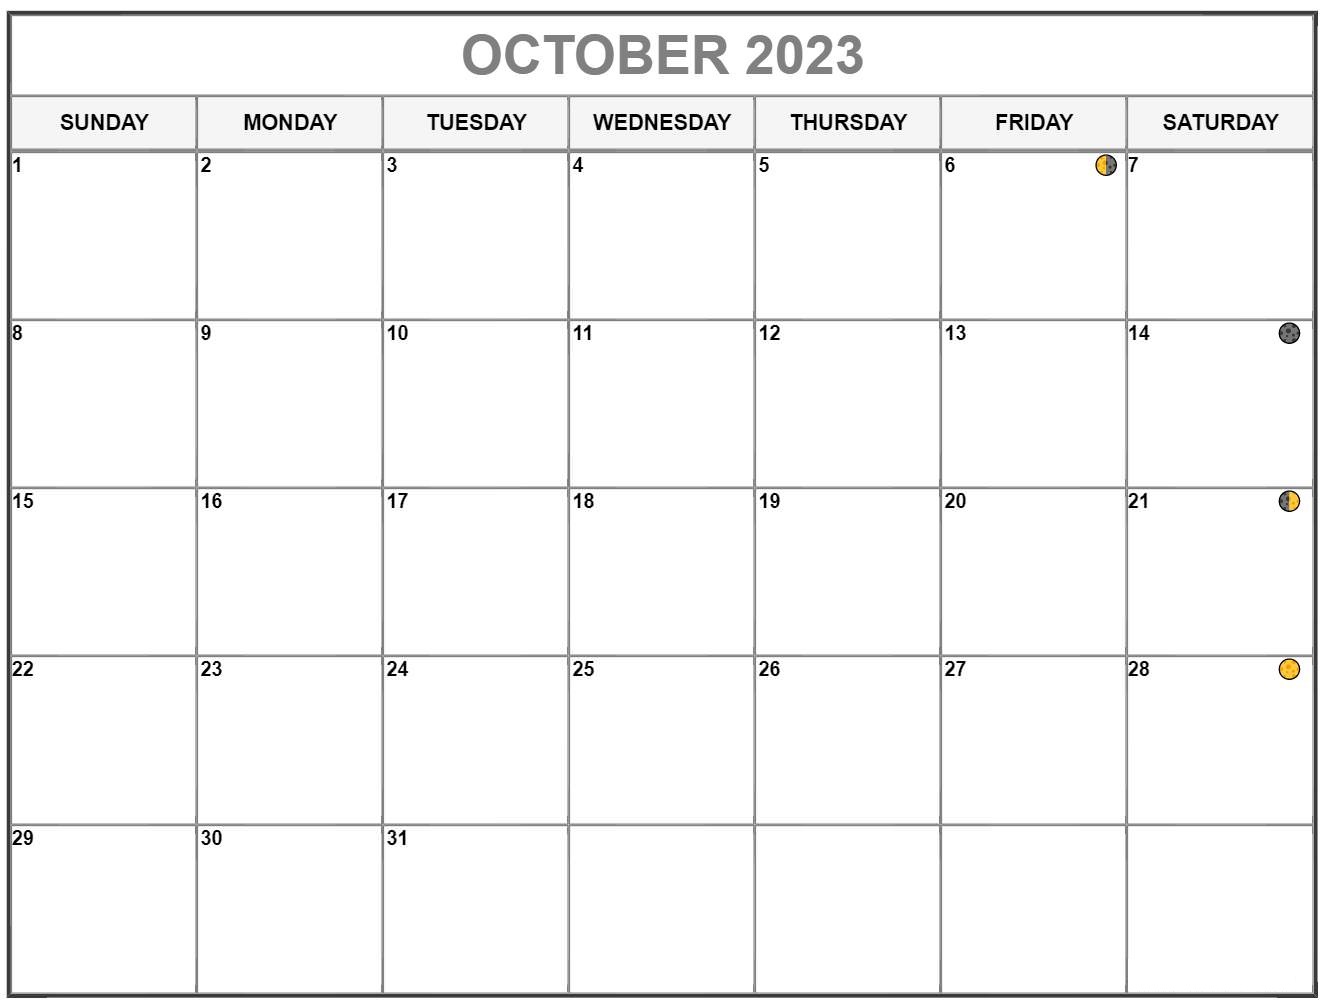 October 2023 Moon Calendar Templates